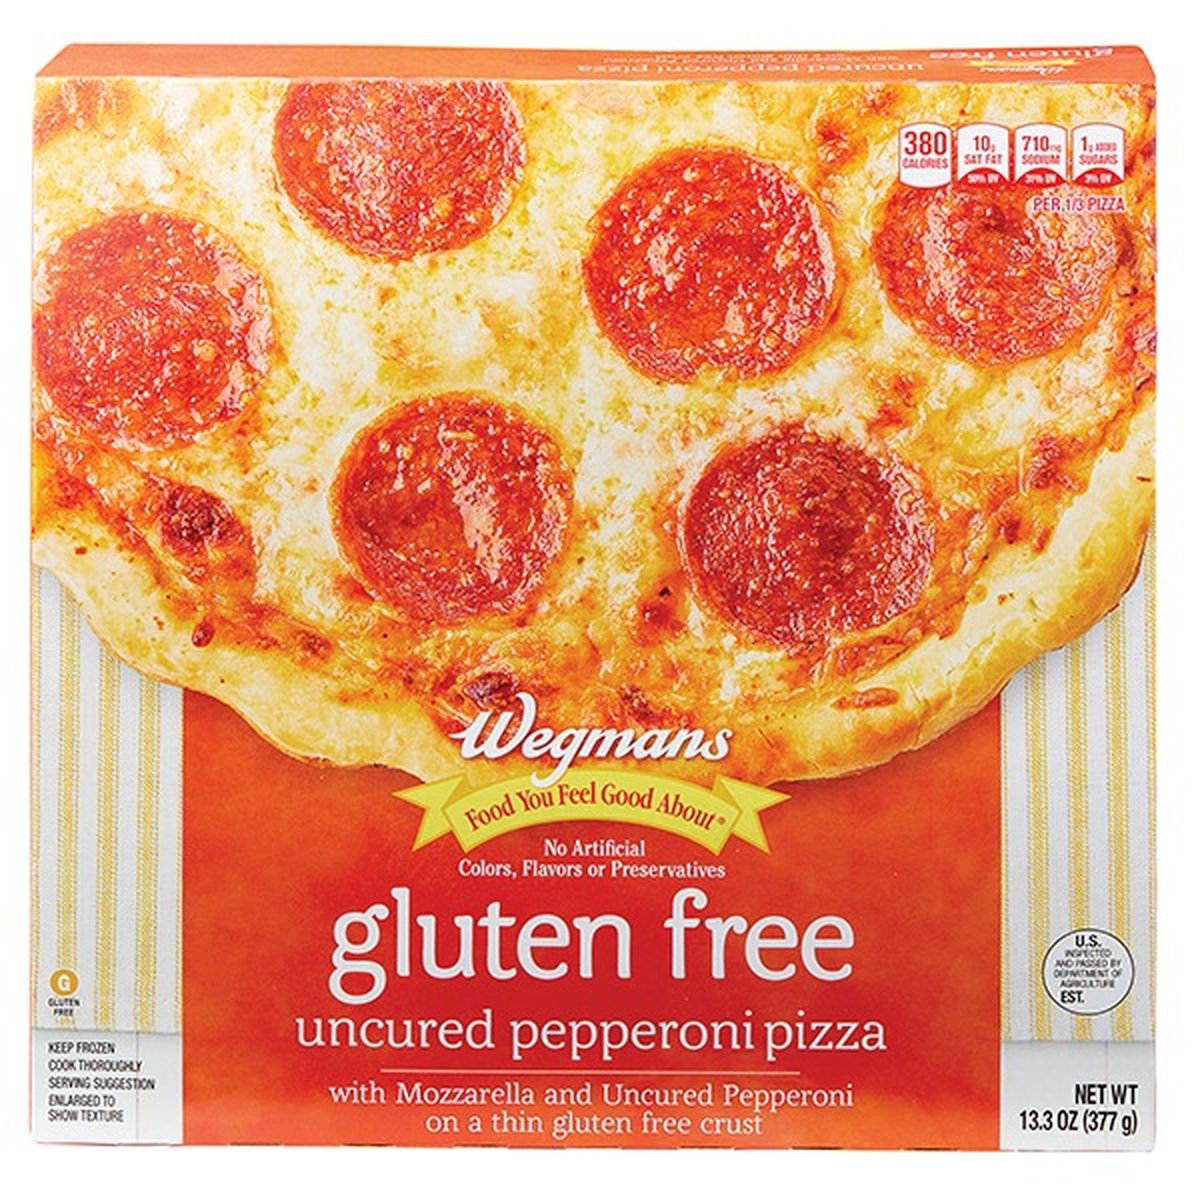 Calories in Wegmans Gluten Free Pizza, Pepperoni, Uncured